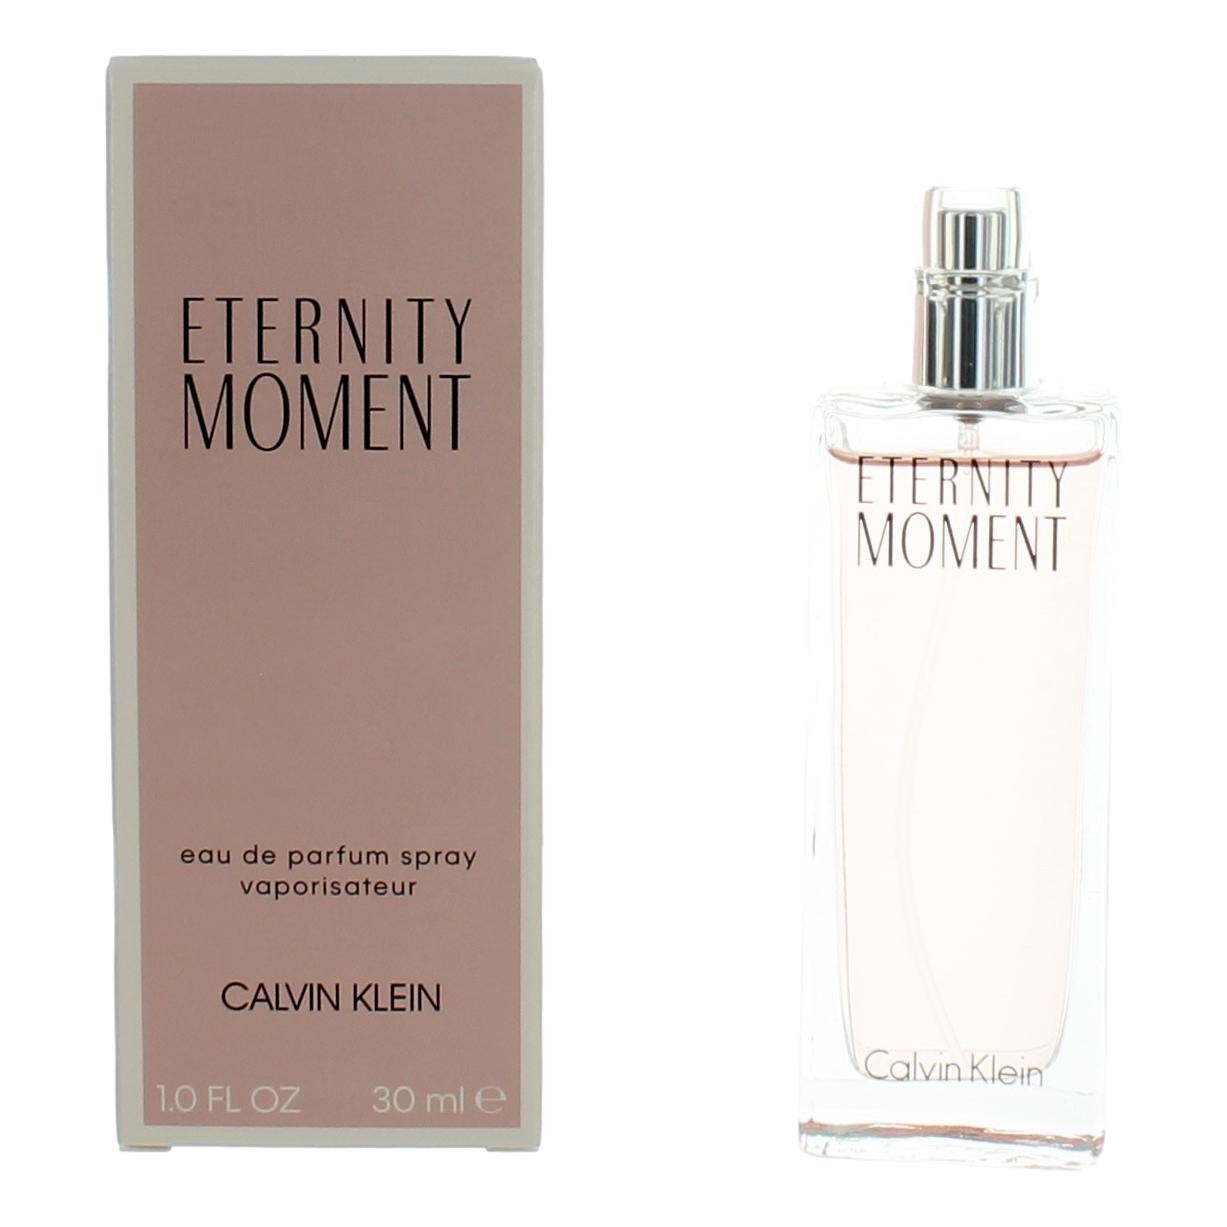 Eternity Moment by Calvin Klein 1 oz Eau De Parfum Spray for Women